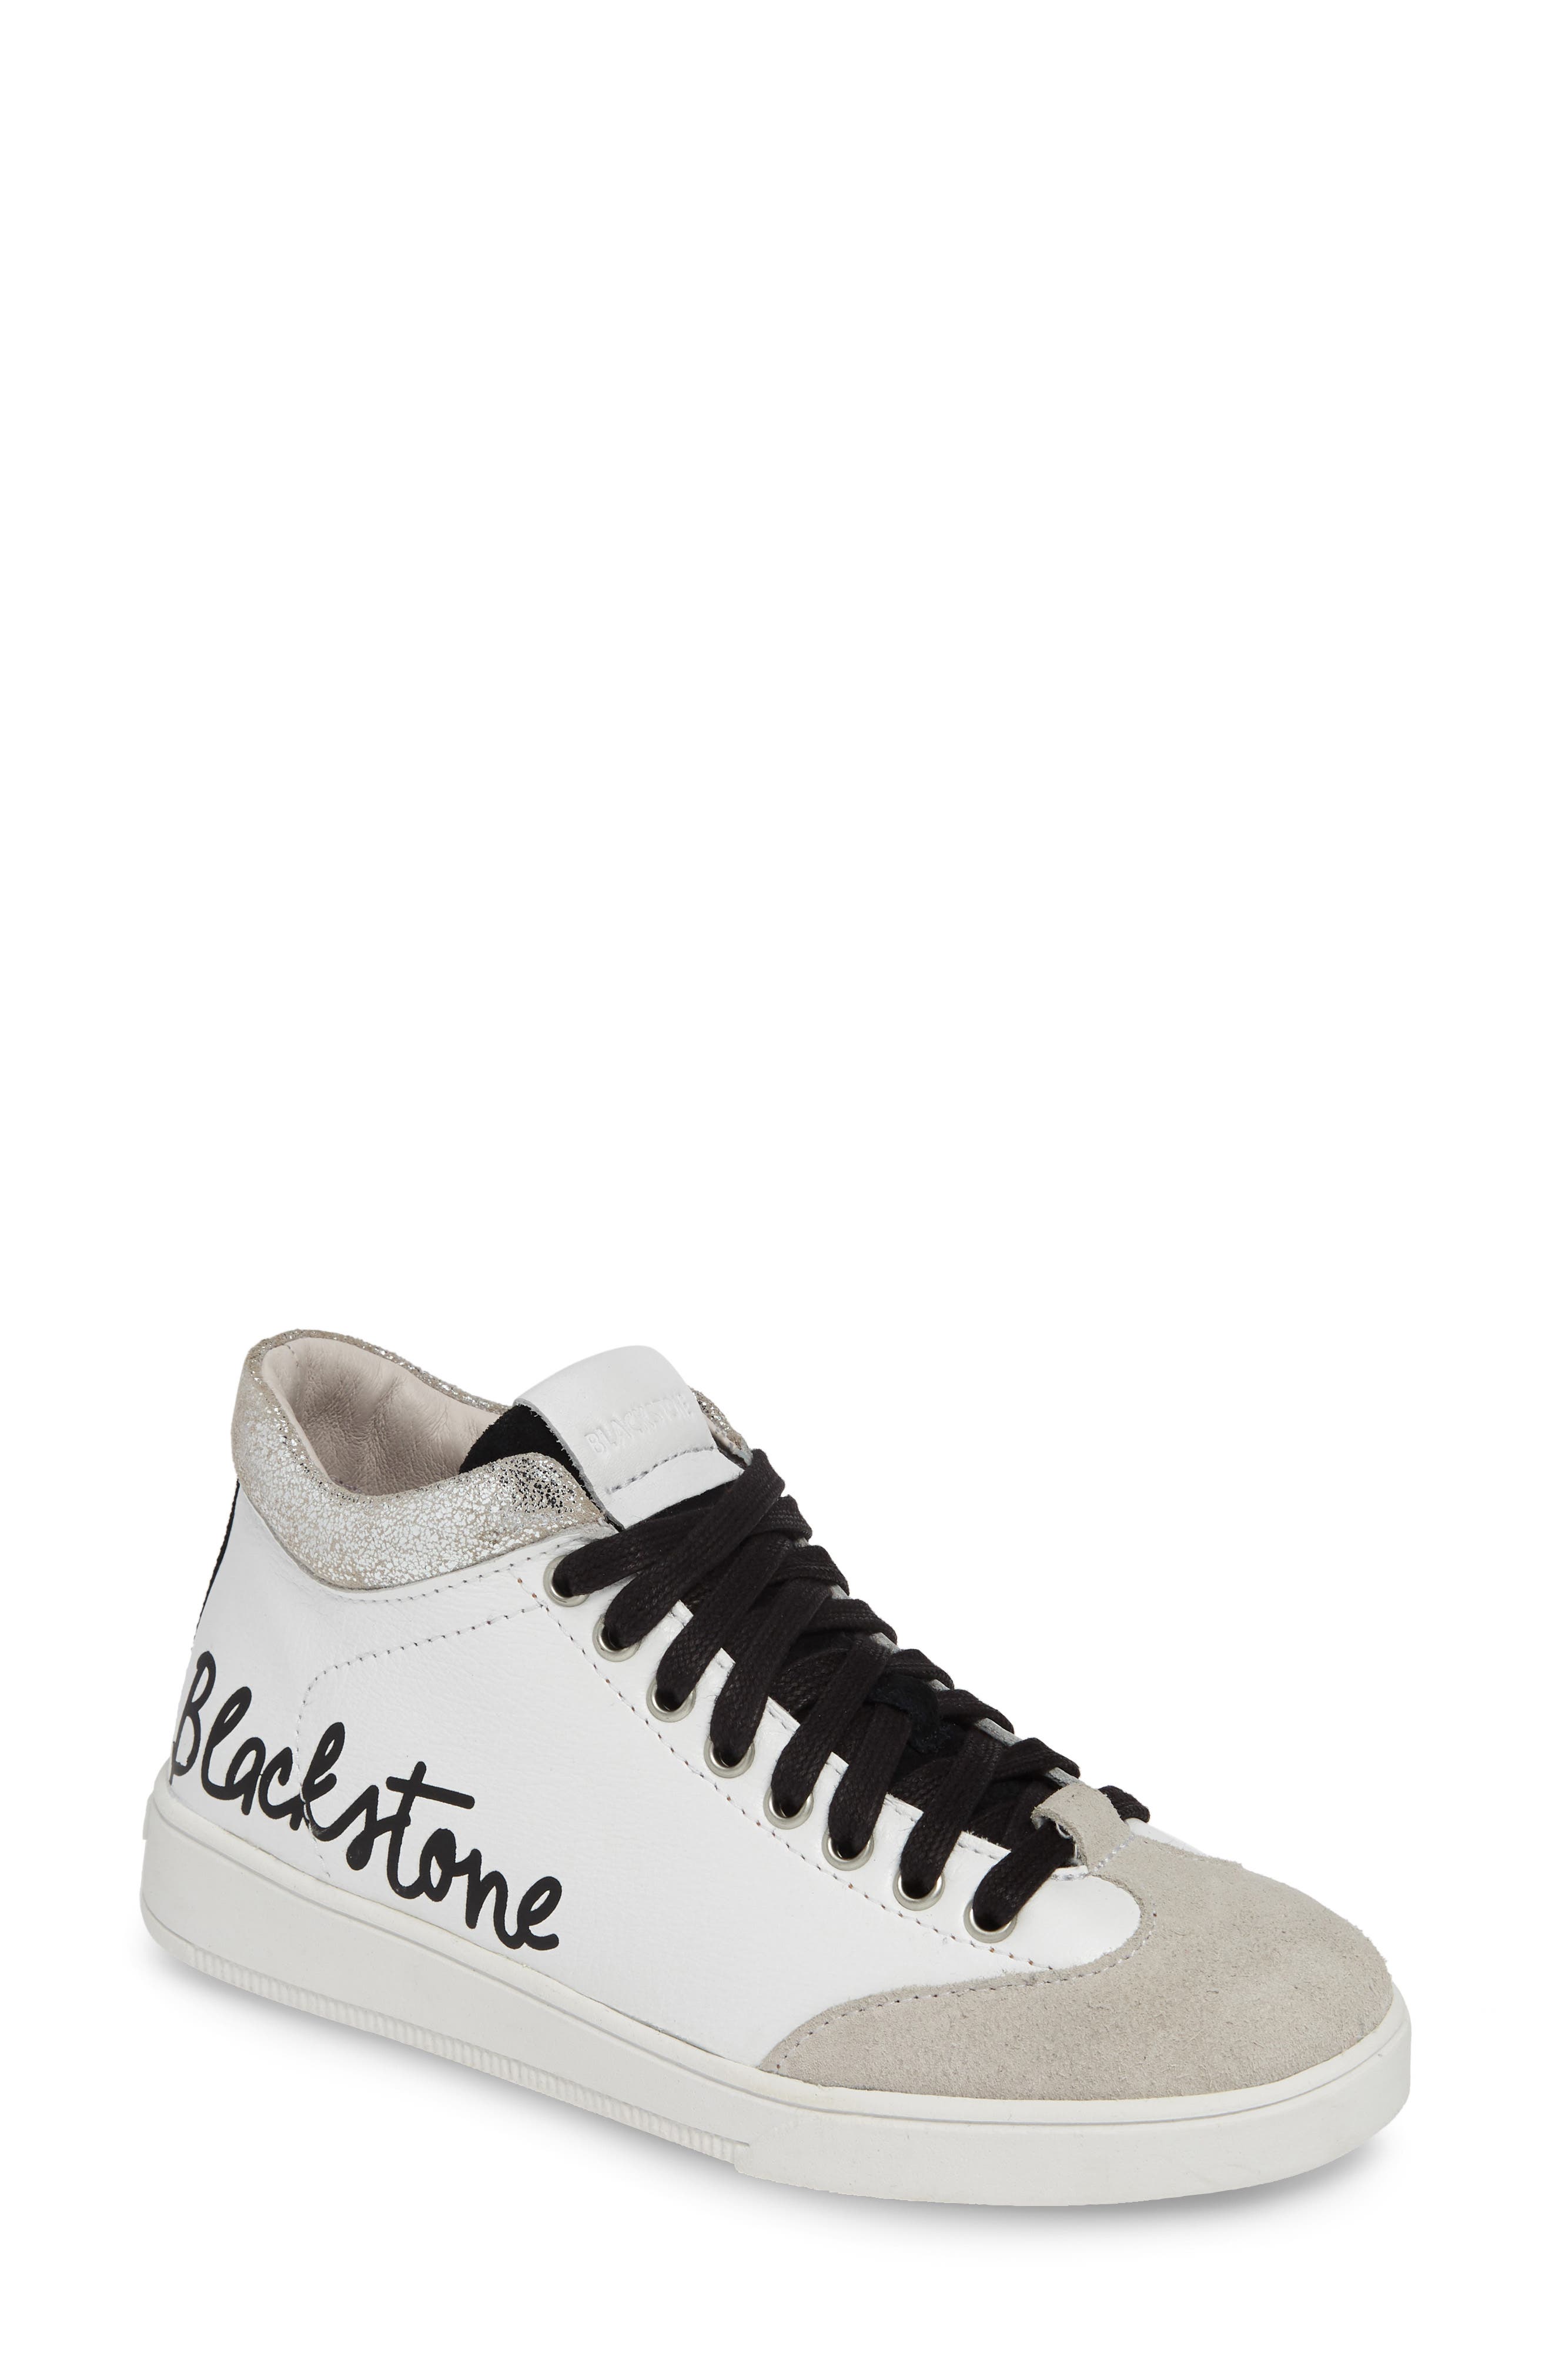 blackstone shoes nordstrom